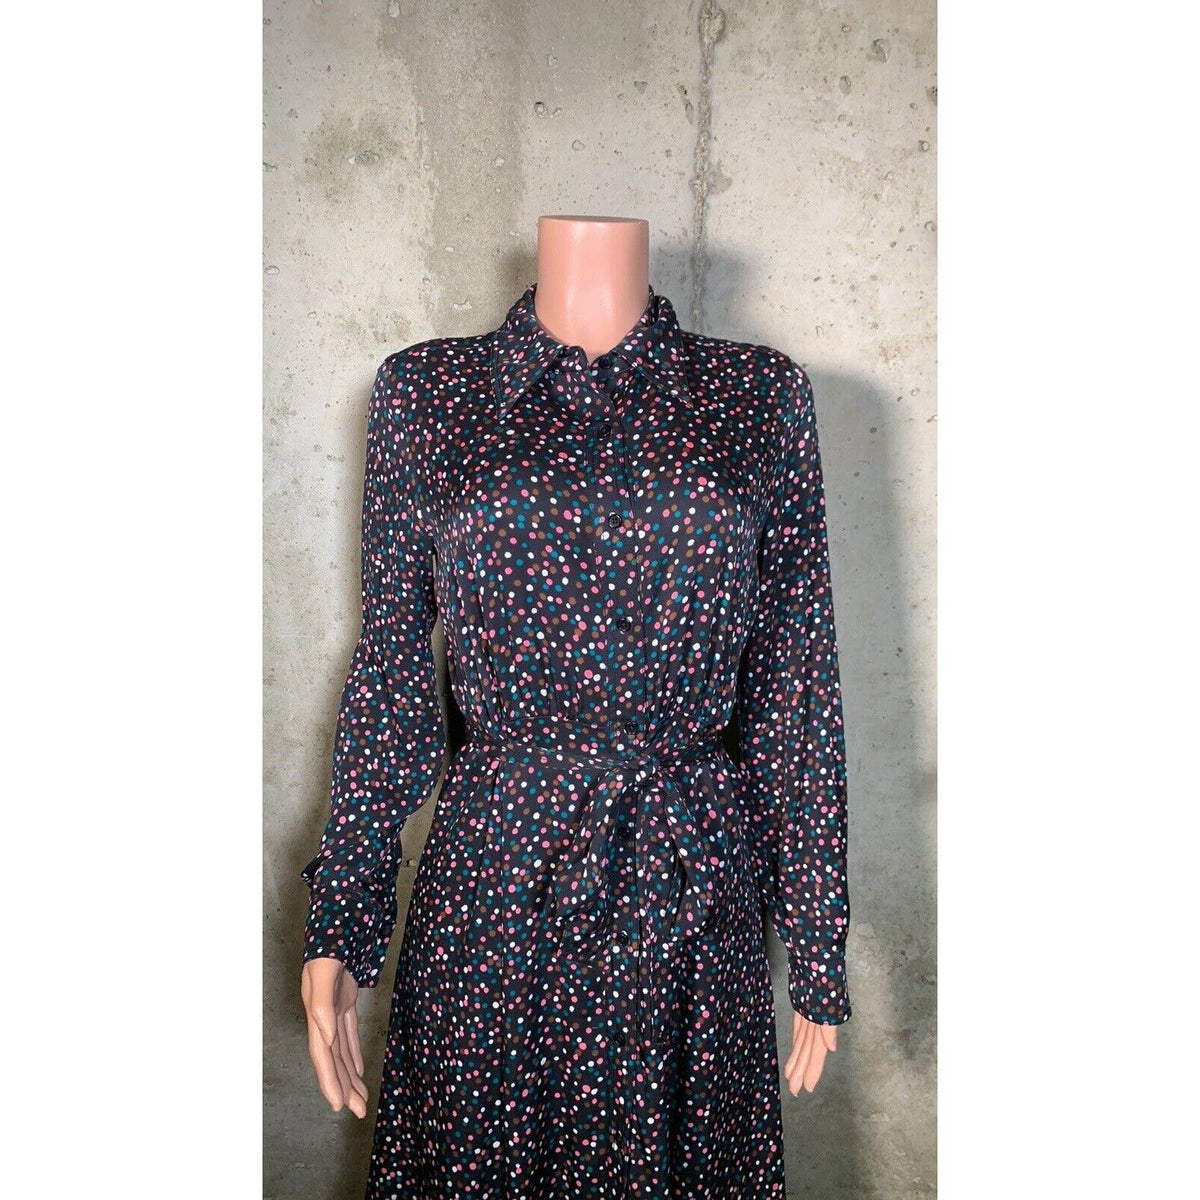 Diane Von Furstenberg Multi-Color Polka Dot Dress Sz. Medium